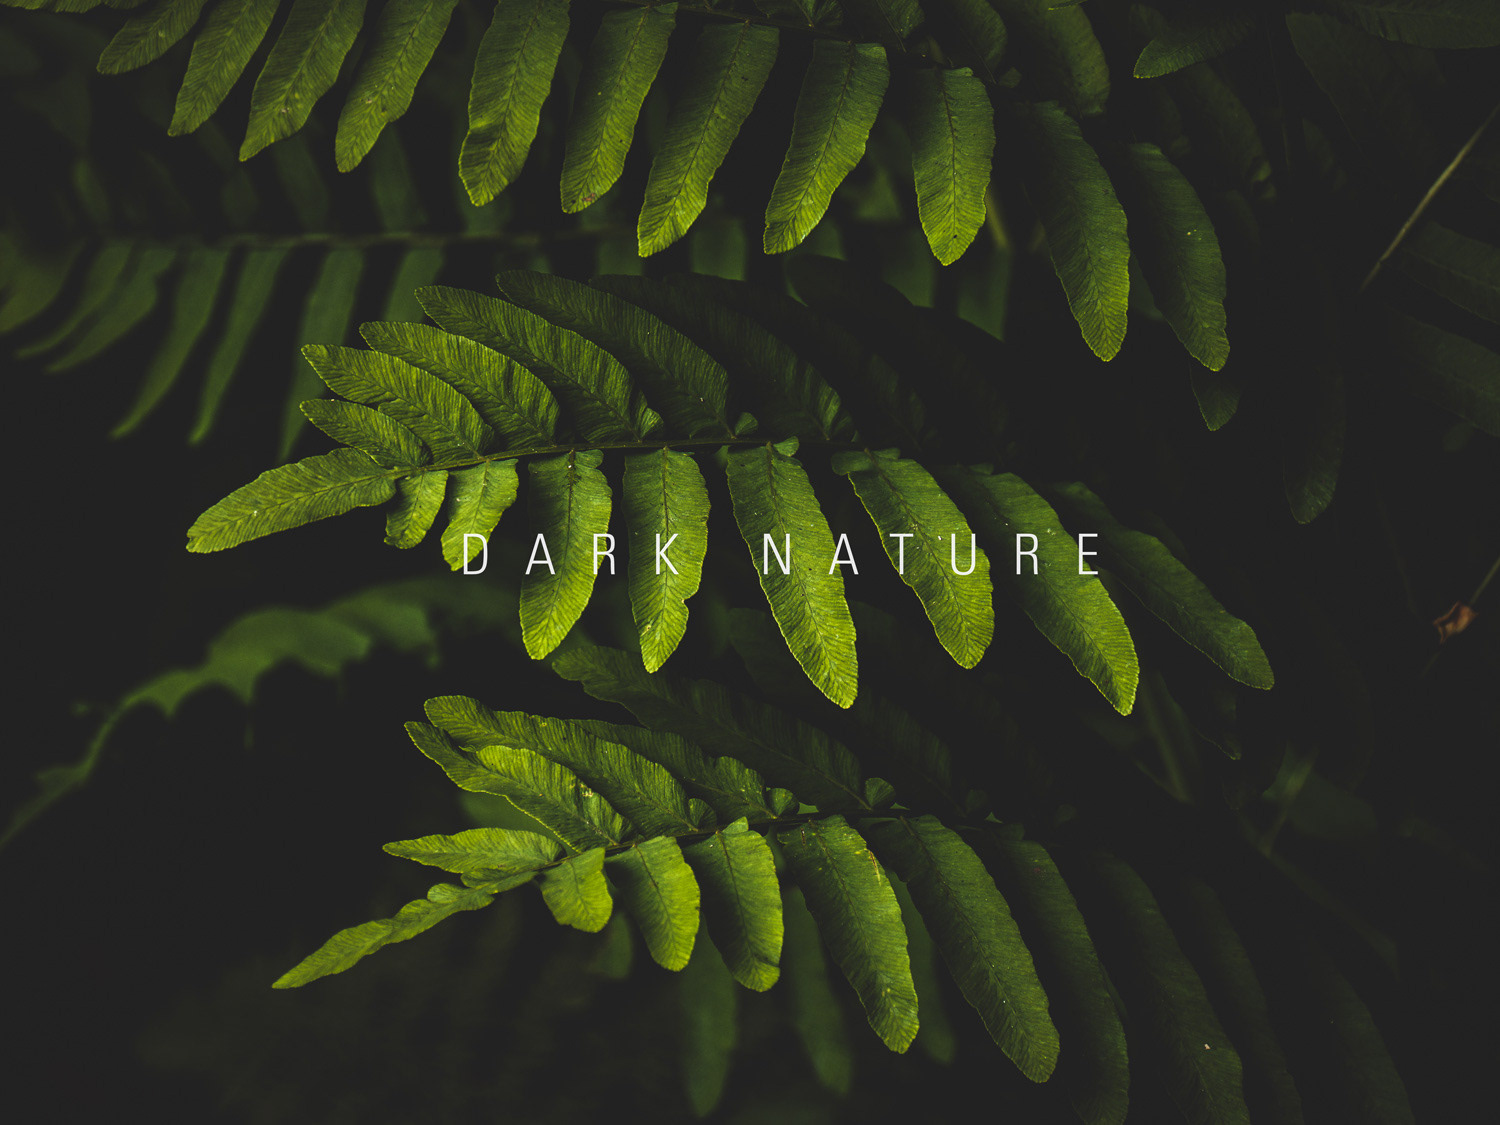 500 Nature Dark Pictures  Download Free Images on Unsplash